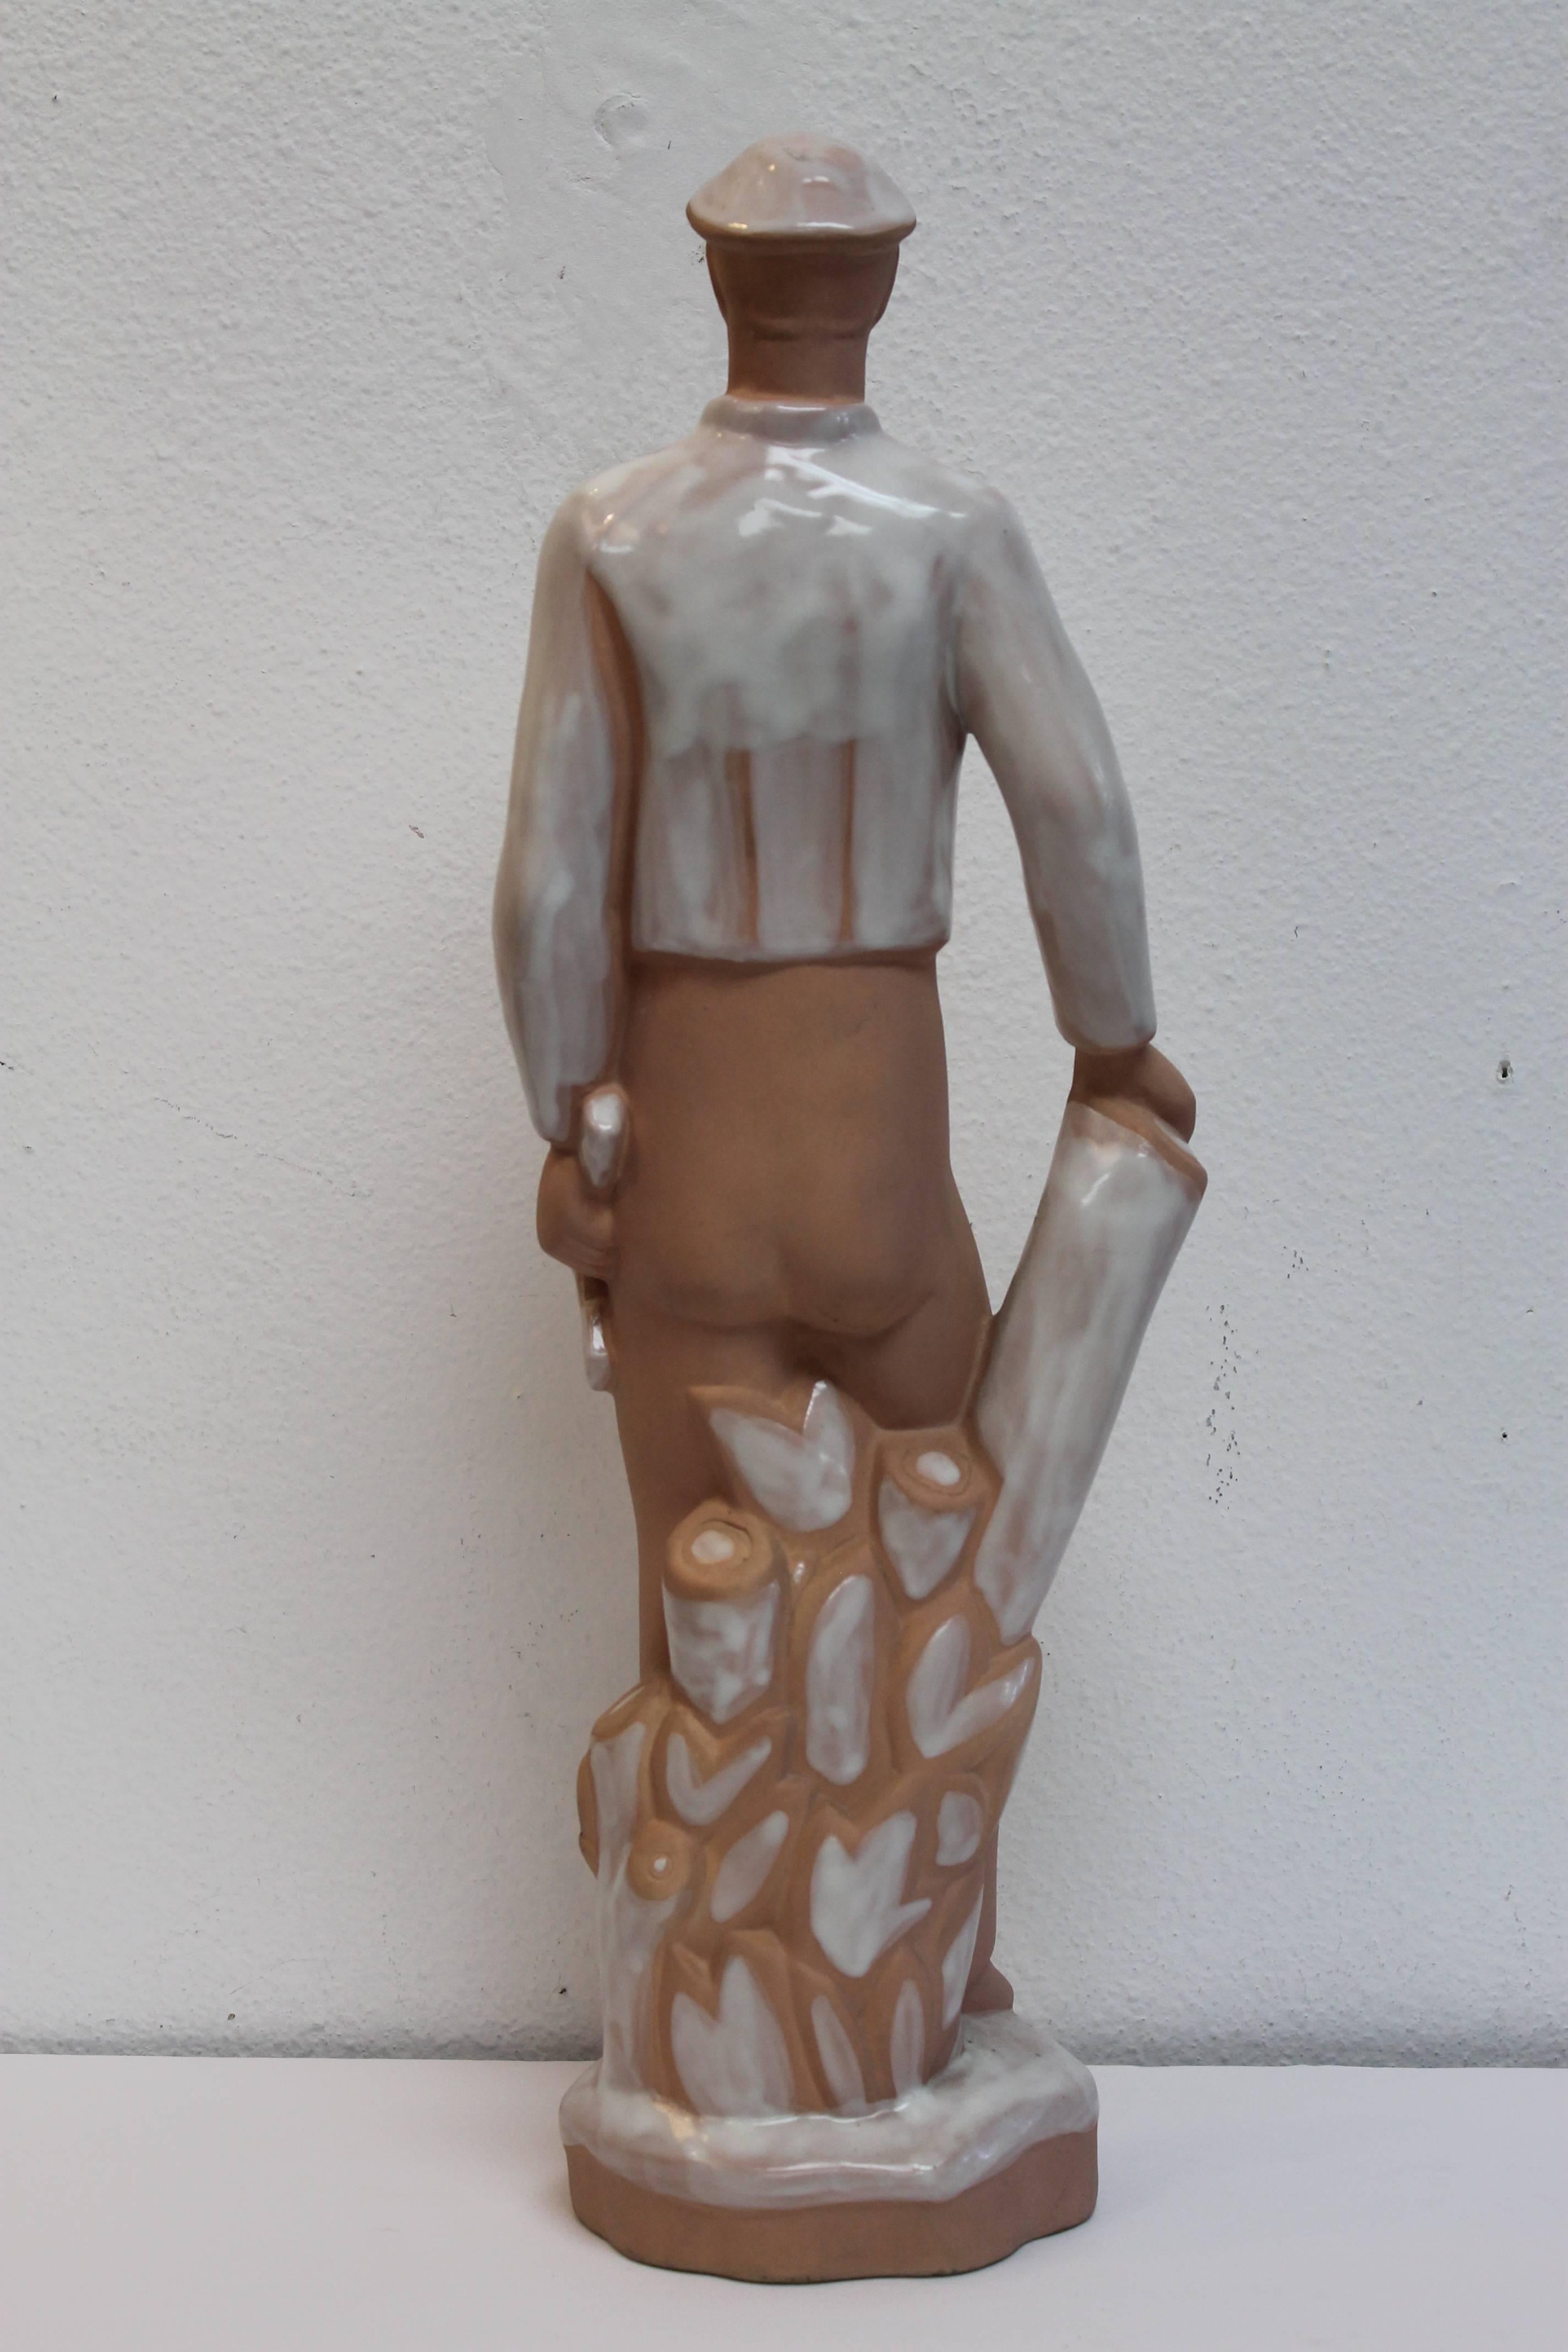 Mid-20th Century Geza de Vegh Ceramic Sculpture, Phoenix Pottery